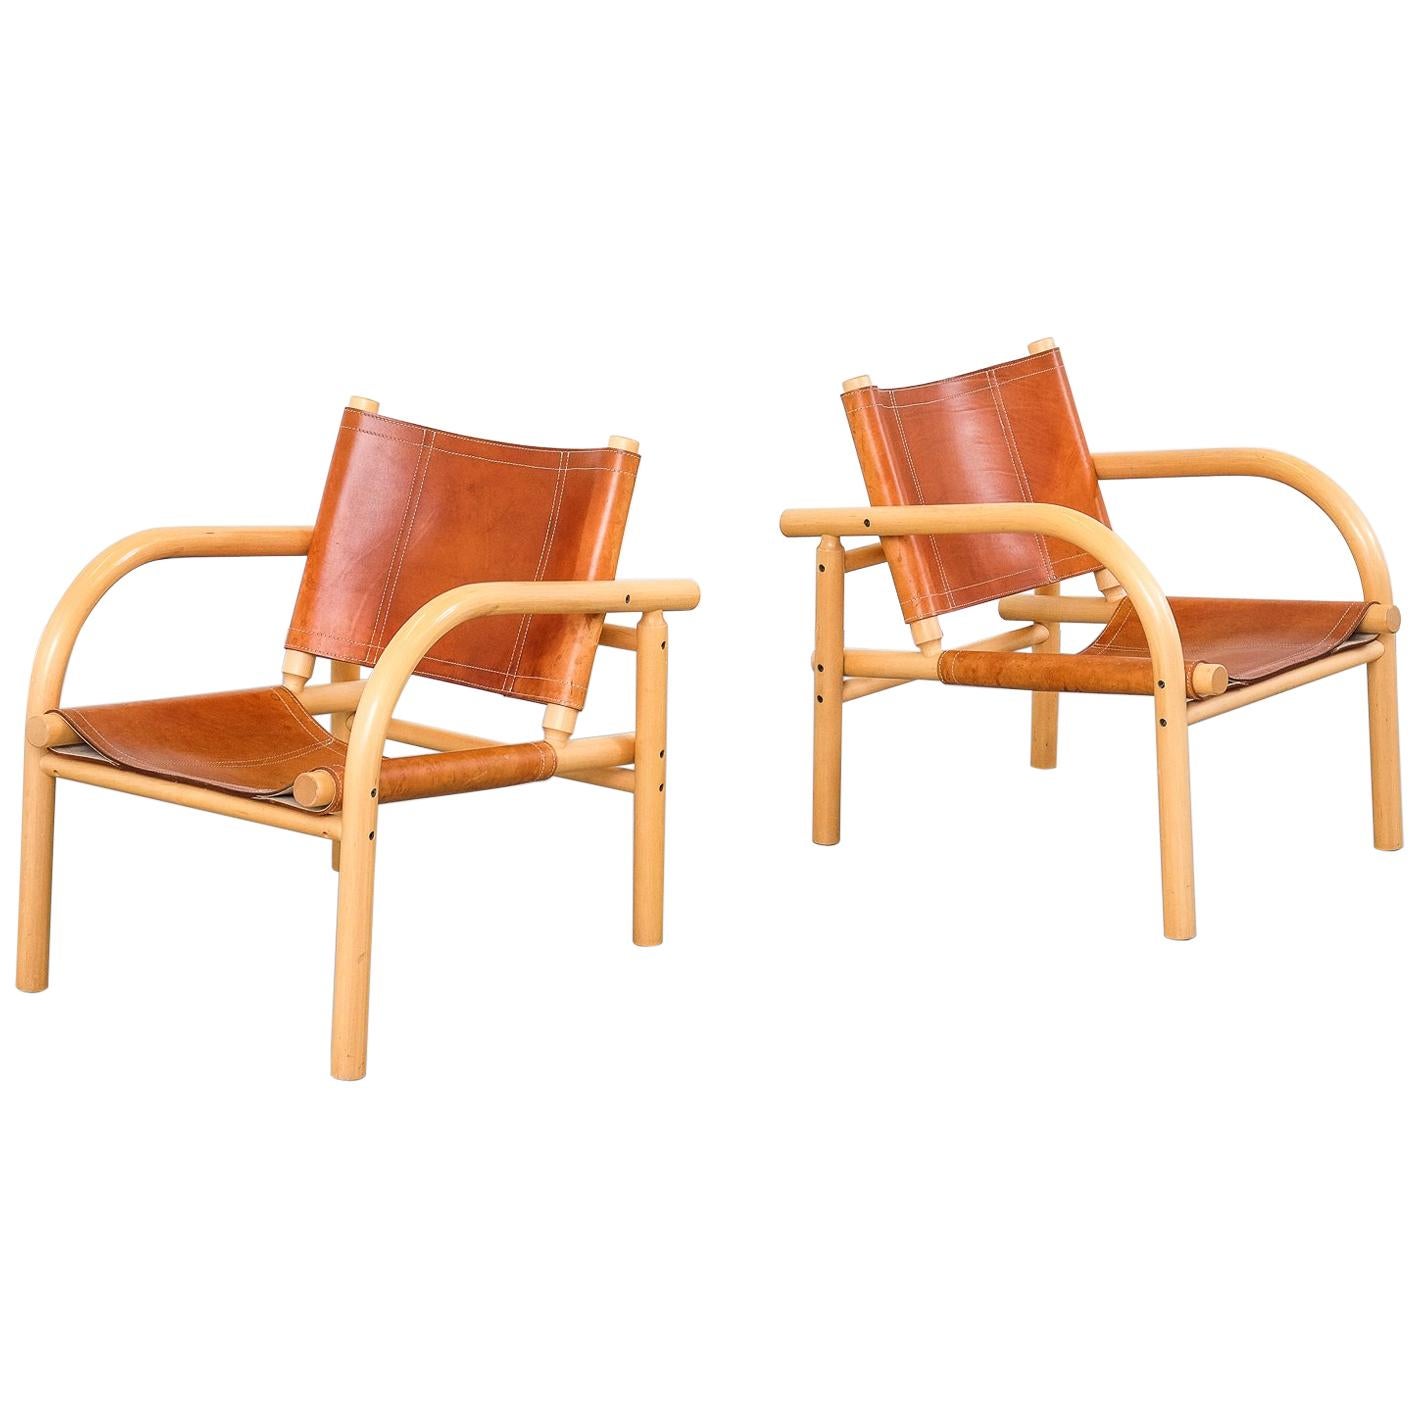 Pair of 1970s Lounge Safari Chairs by Ben af Schultén for Artek